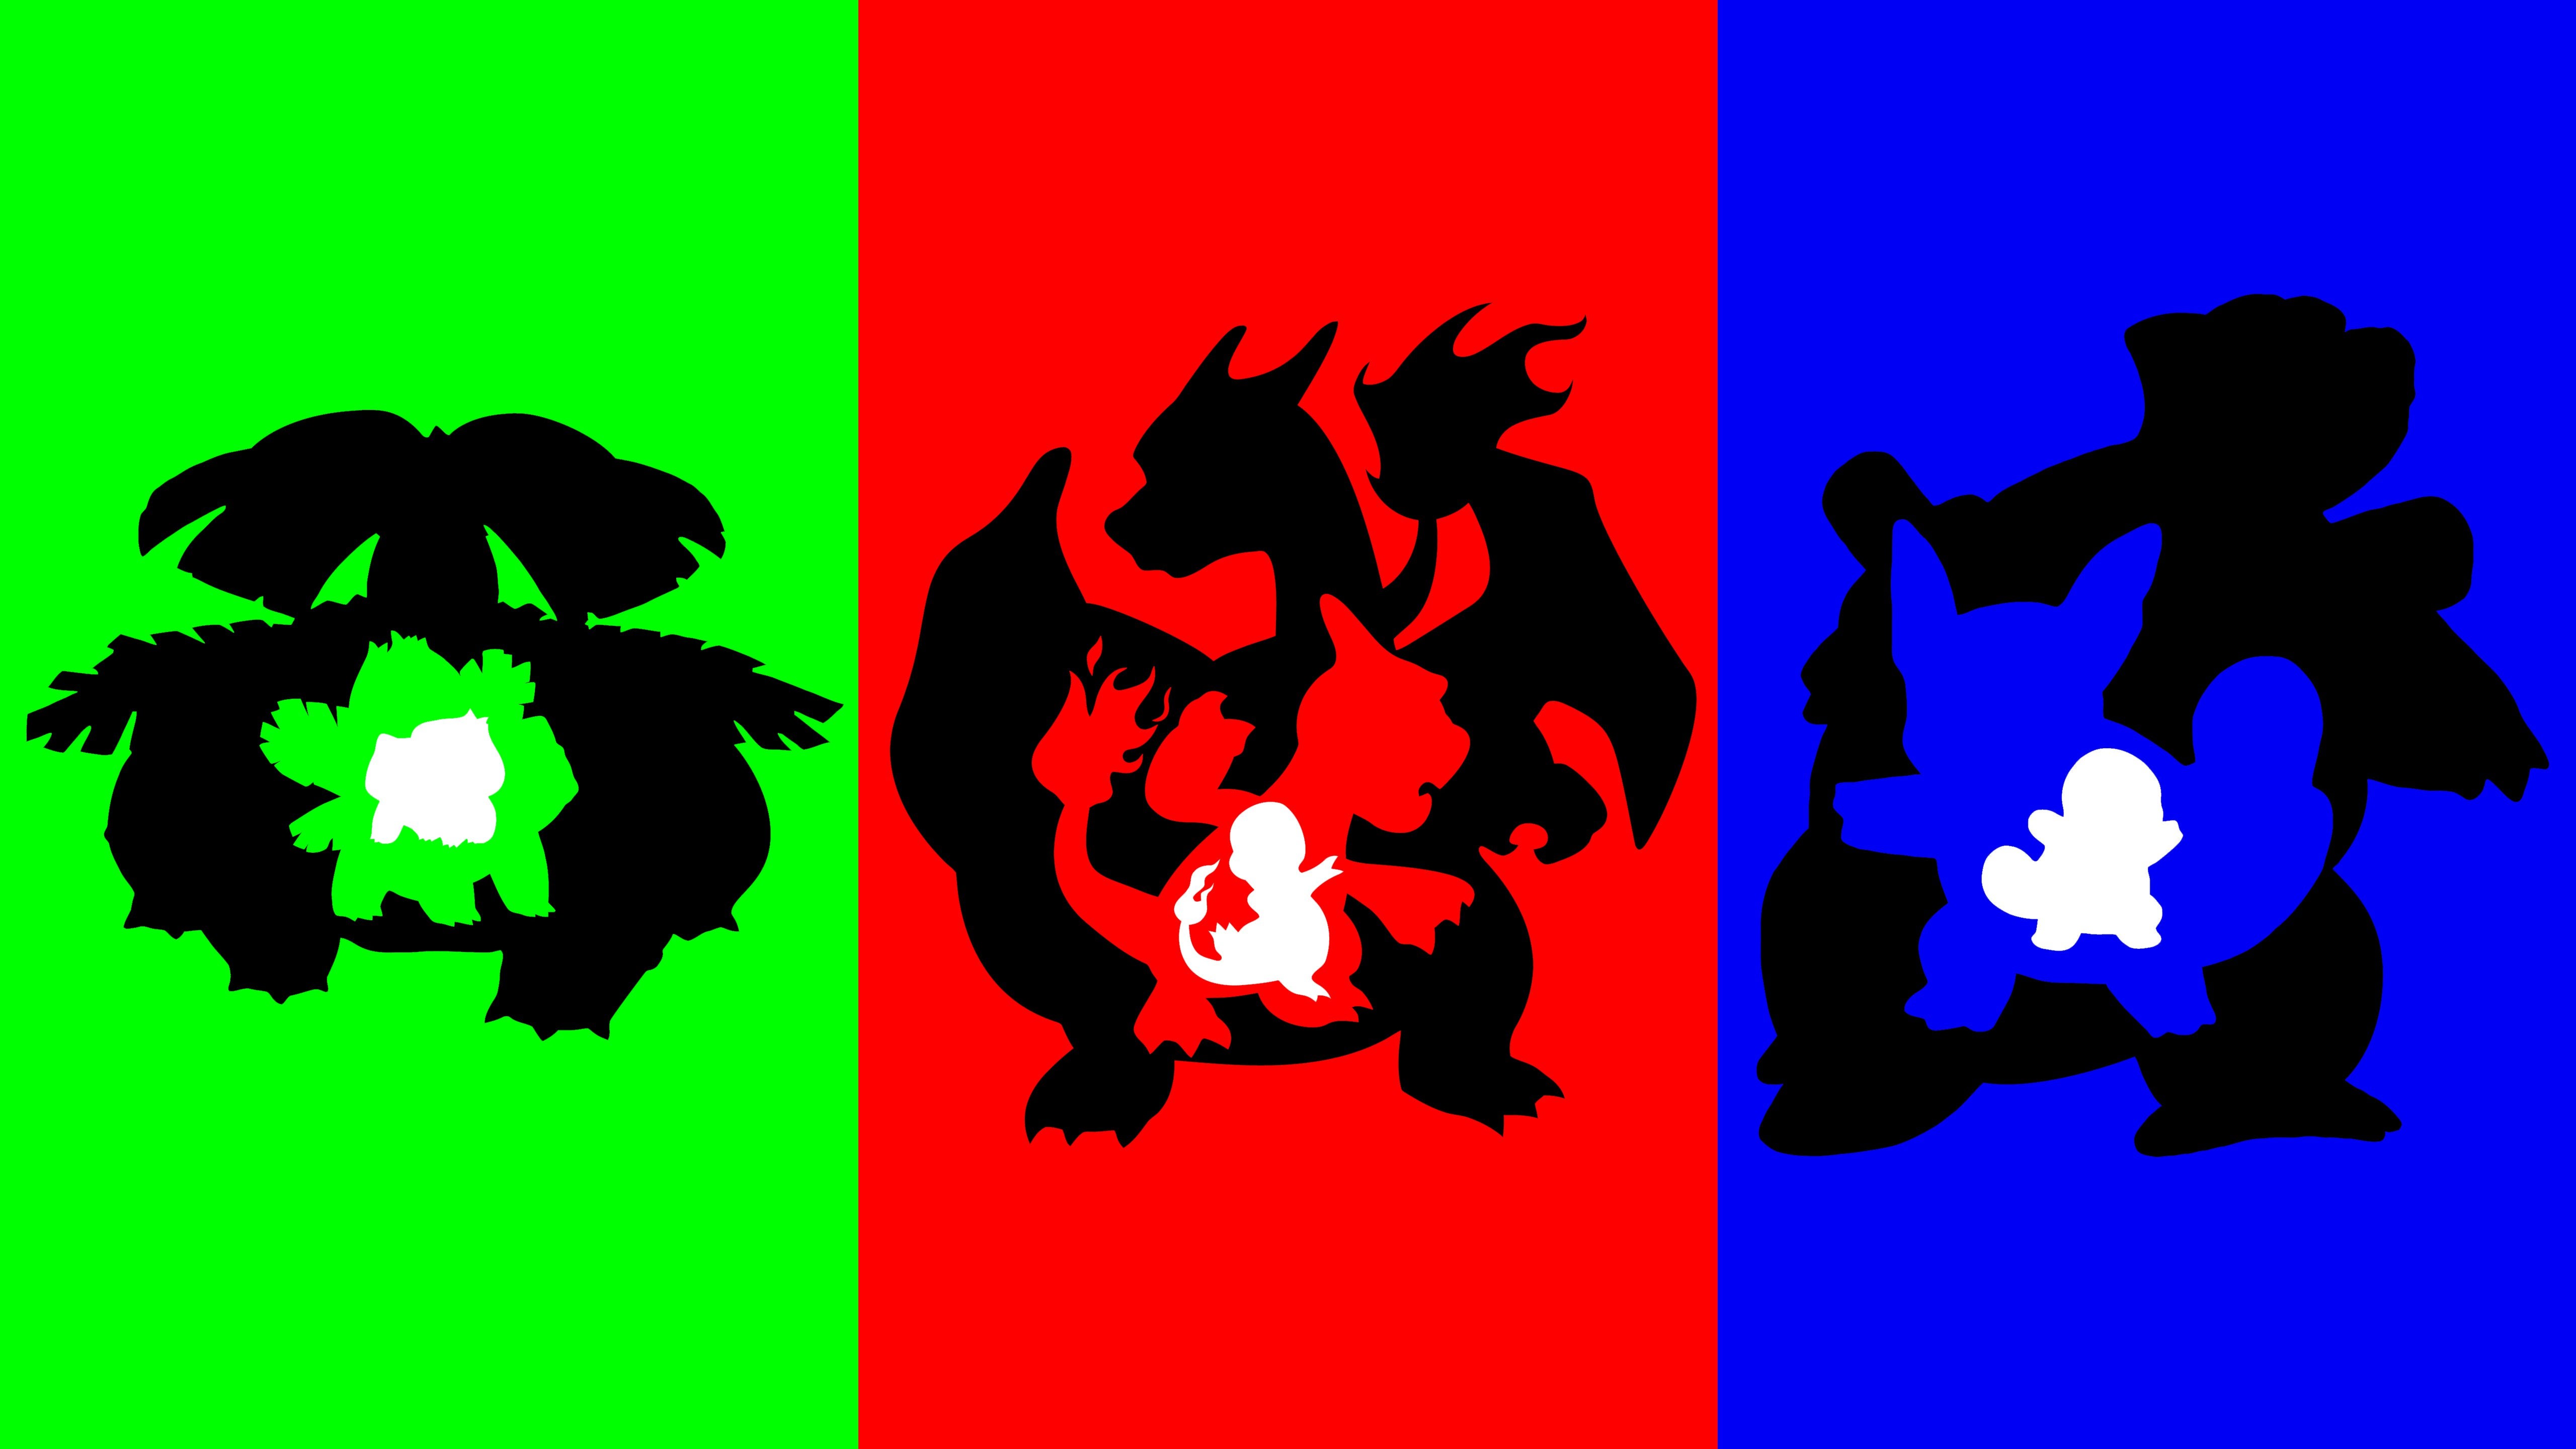 Updated pokemon starters wallpaper. Now with Gen Gen and Gen3 in different shades